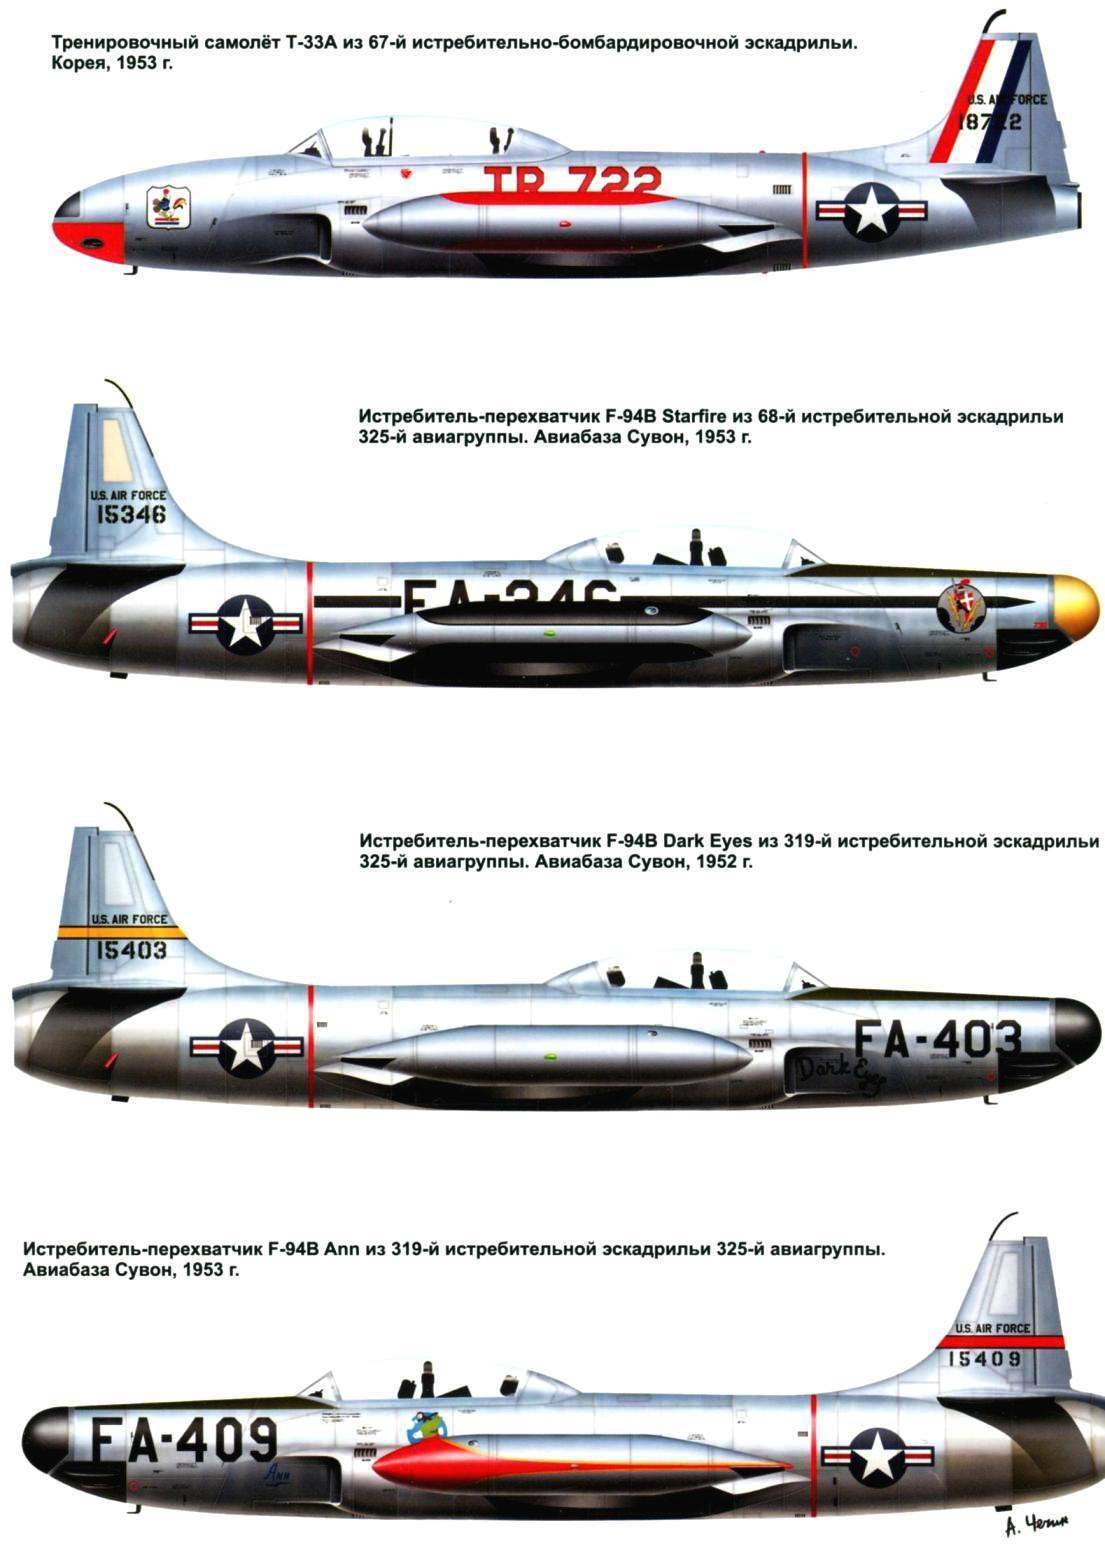 FIGHTER-INTERCEPTOR F-94 STARFIRE